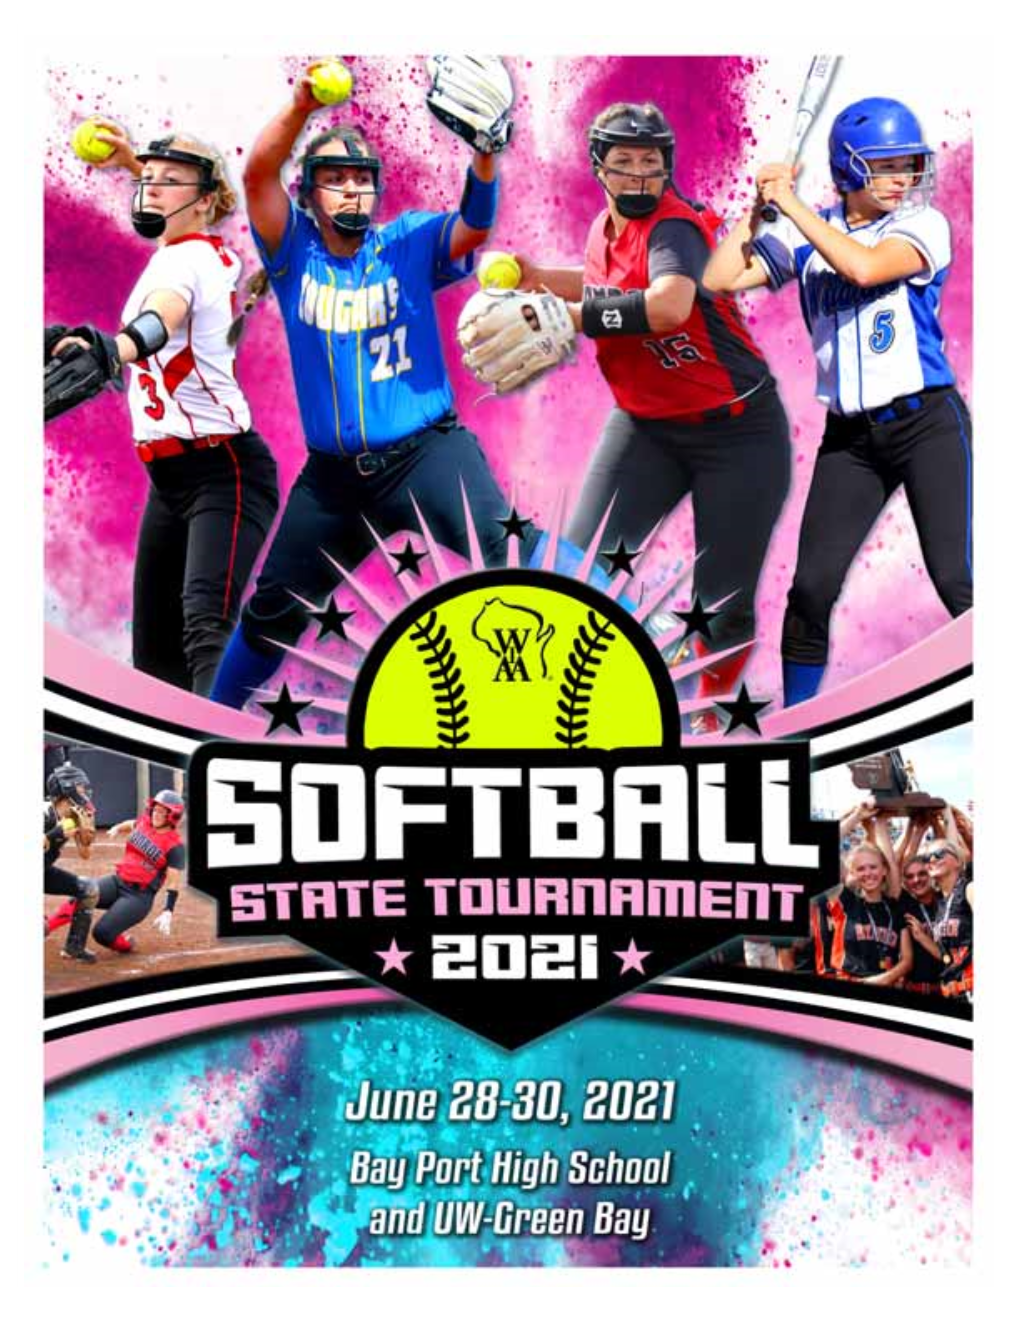 State Tournament Program